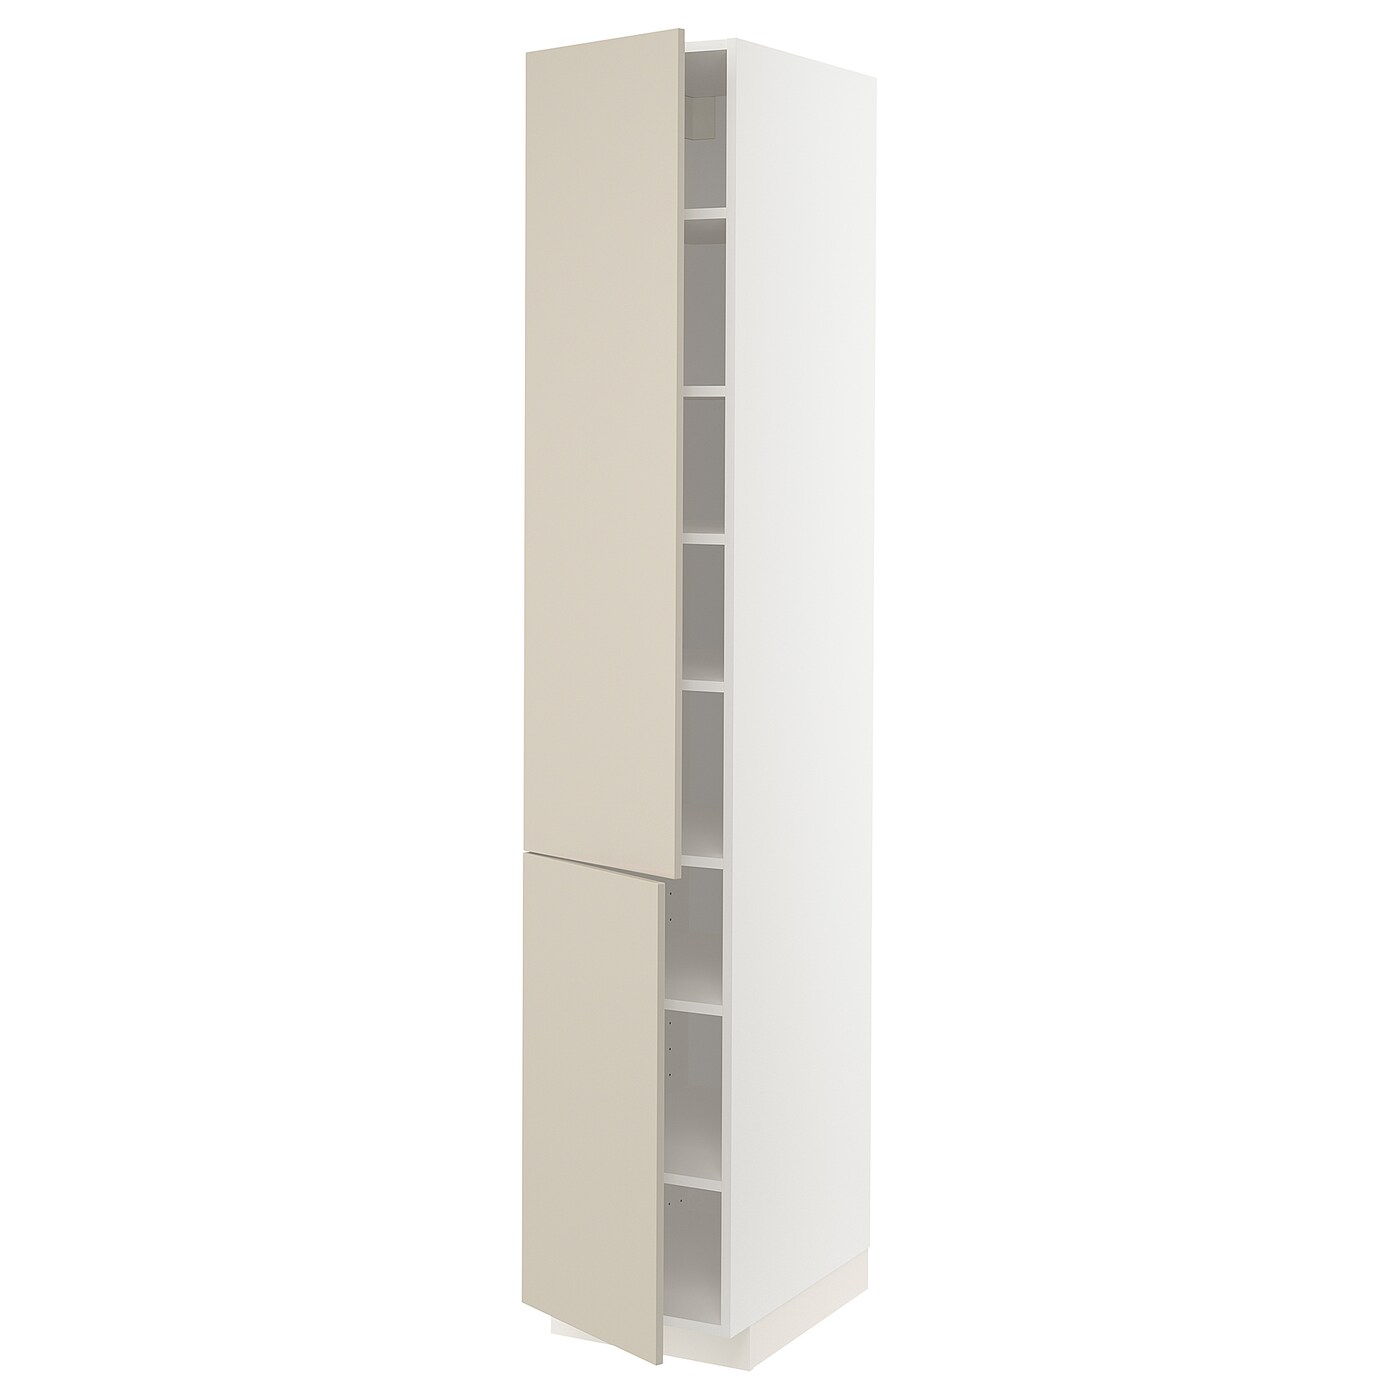 Высокий кухонный шкаф с полками - IKEA METOD/МЕТОД ИКЕА, 220х60х40 см, белый/бежевый